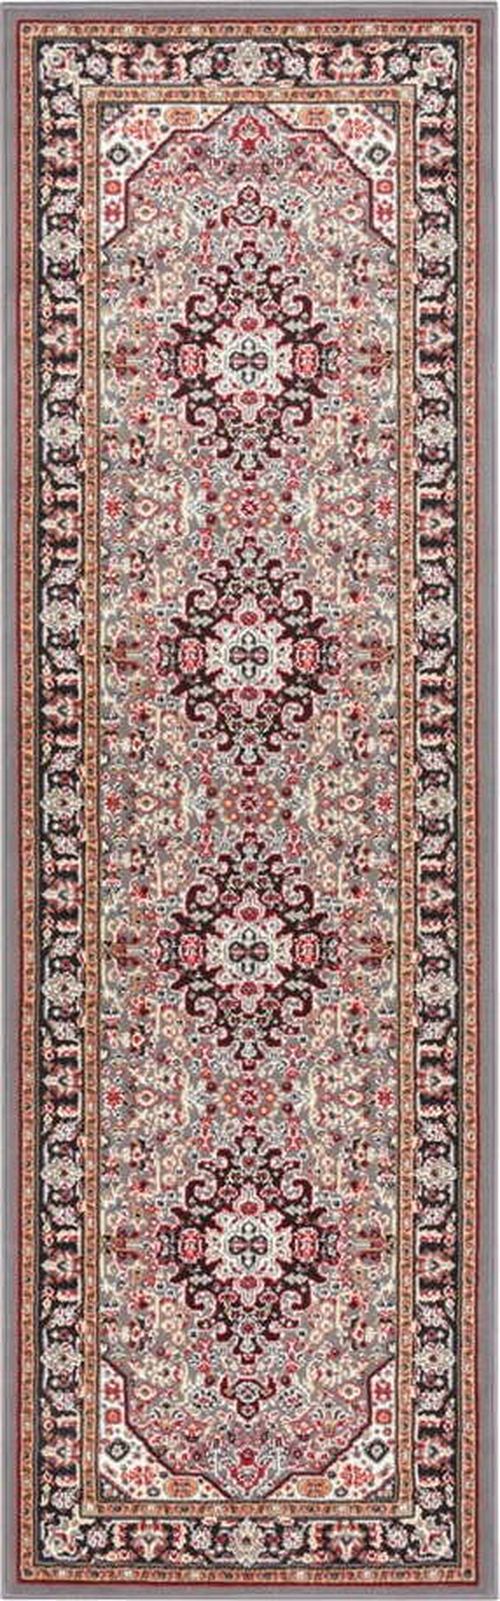 Šedo-hnědý koberec Nouristan Skazar Isfahan, 80 x 250 cm